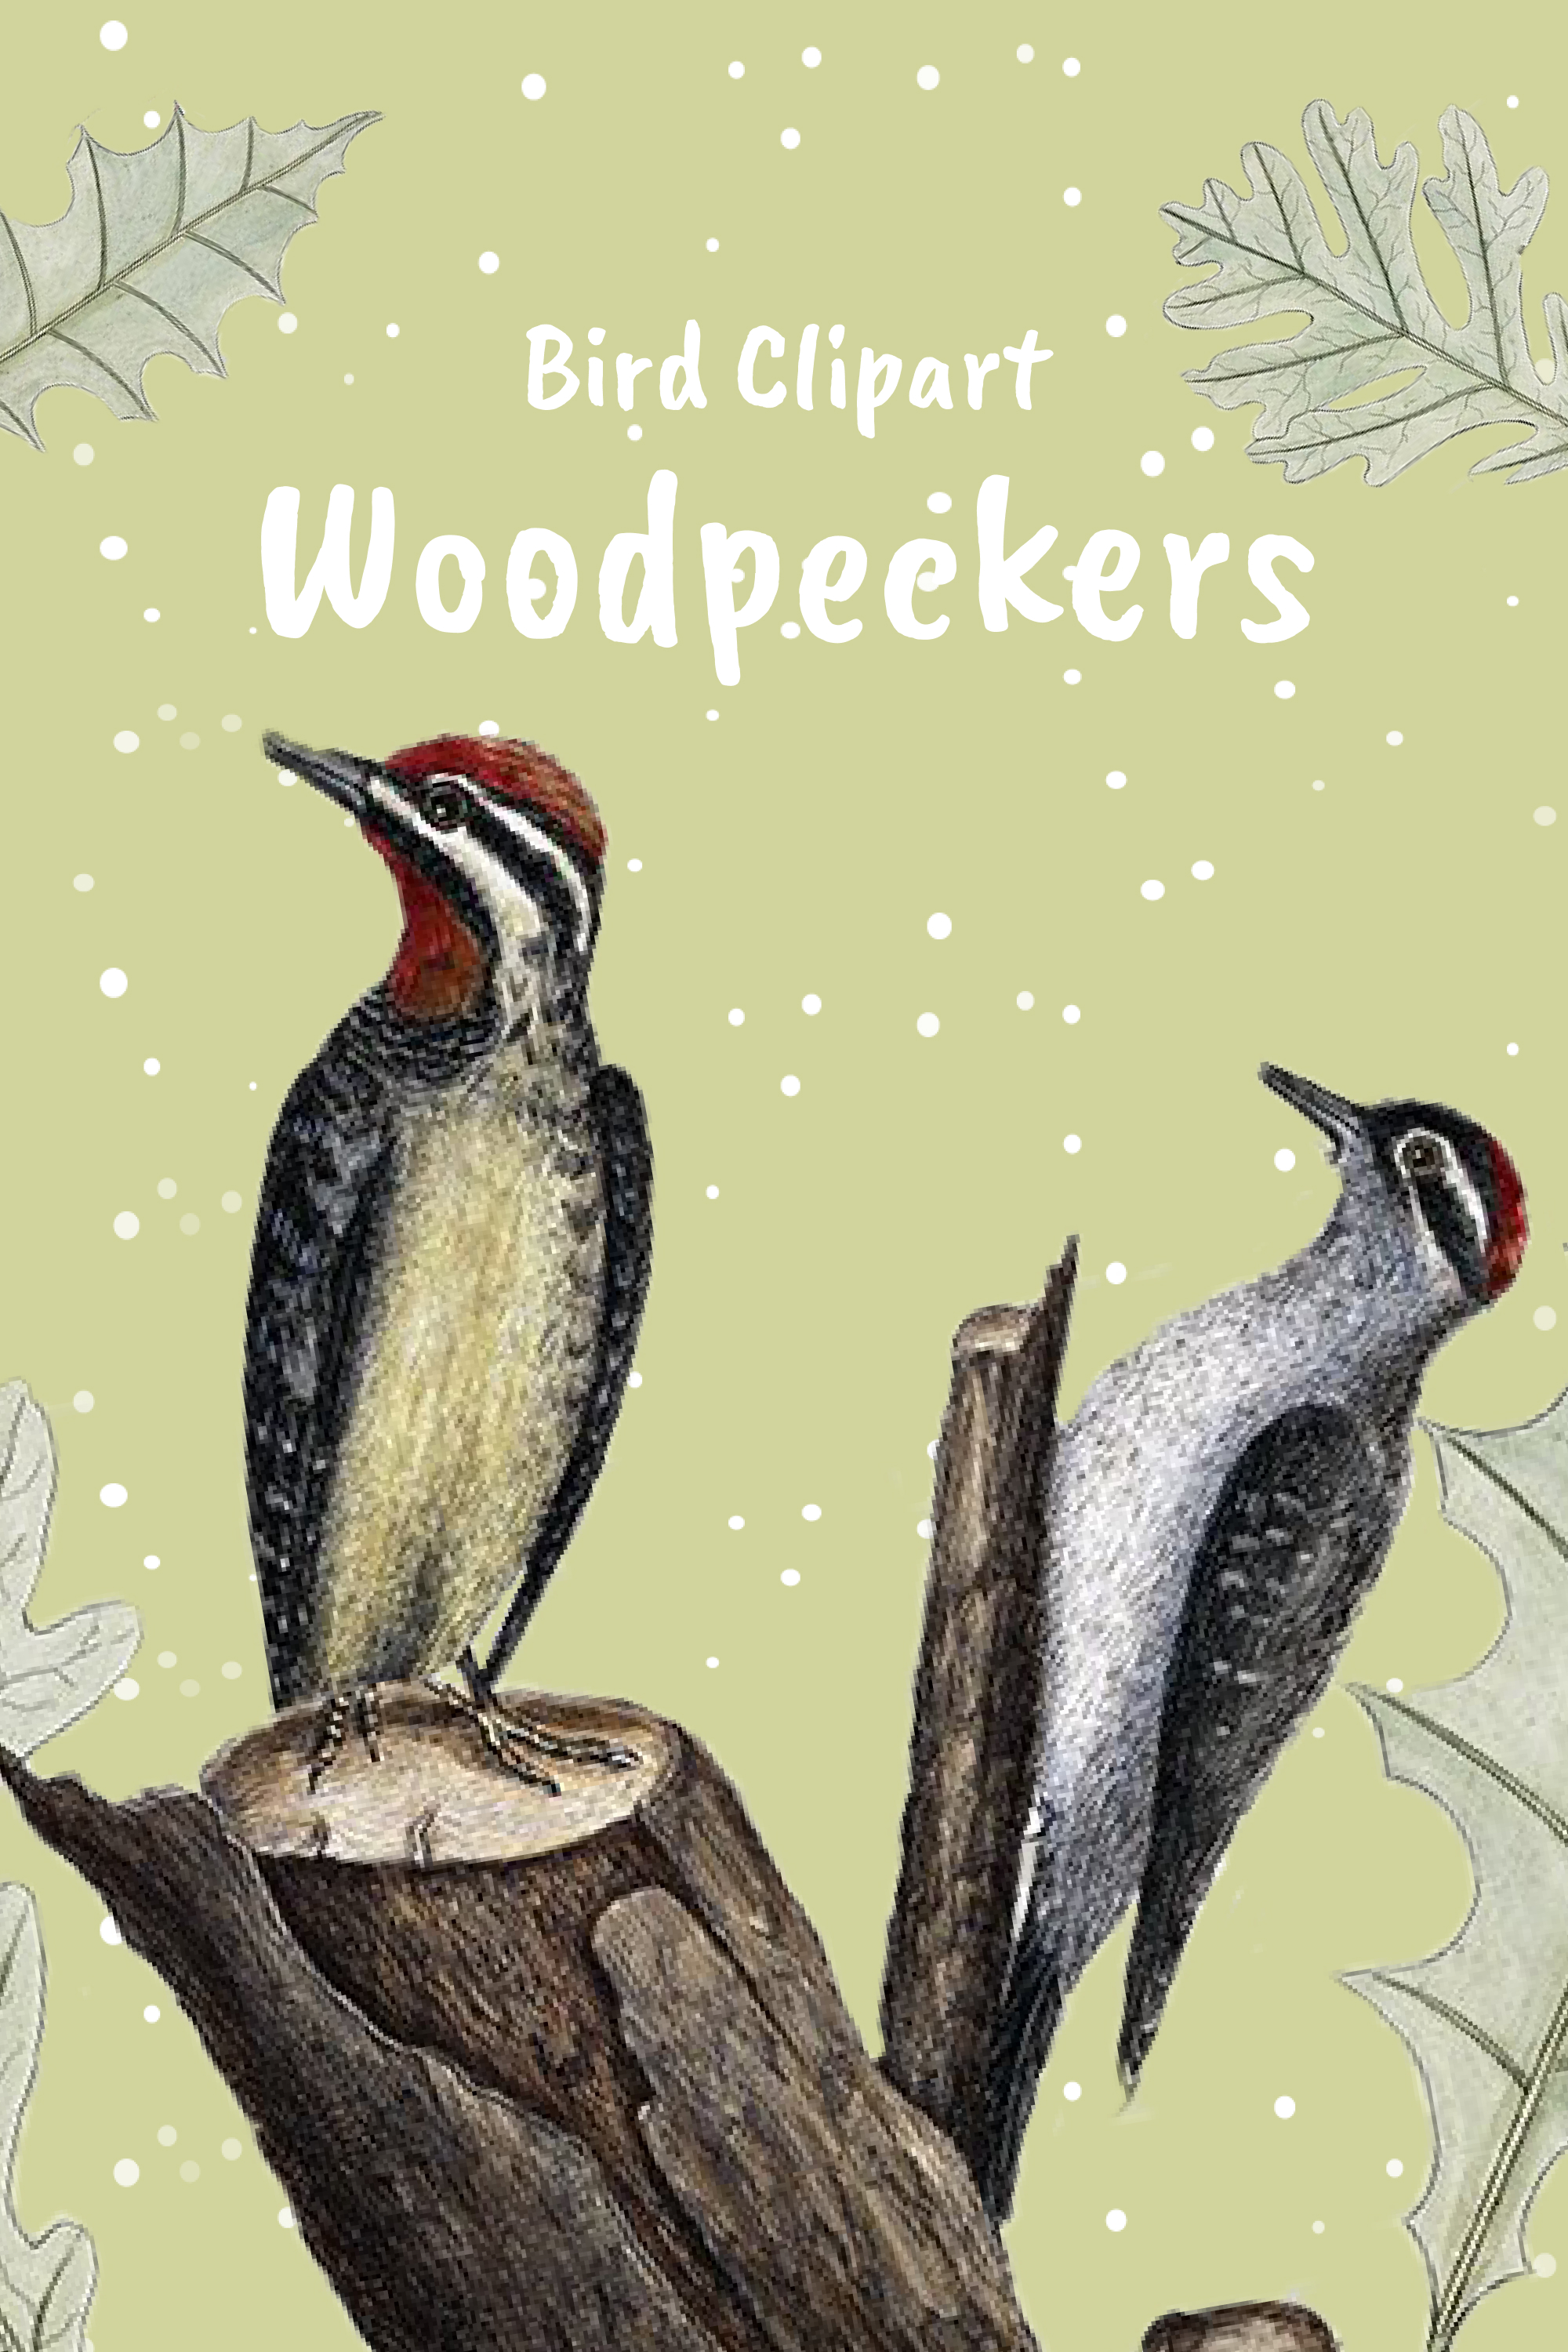 Bird clipart woodpeckers of pinterest.